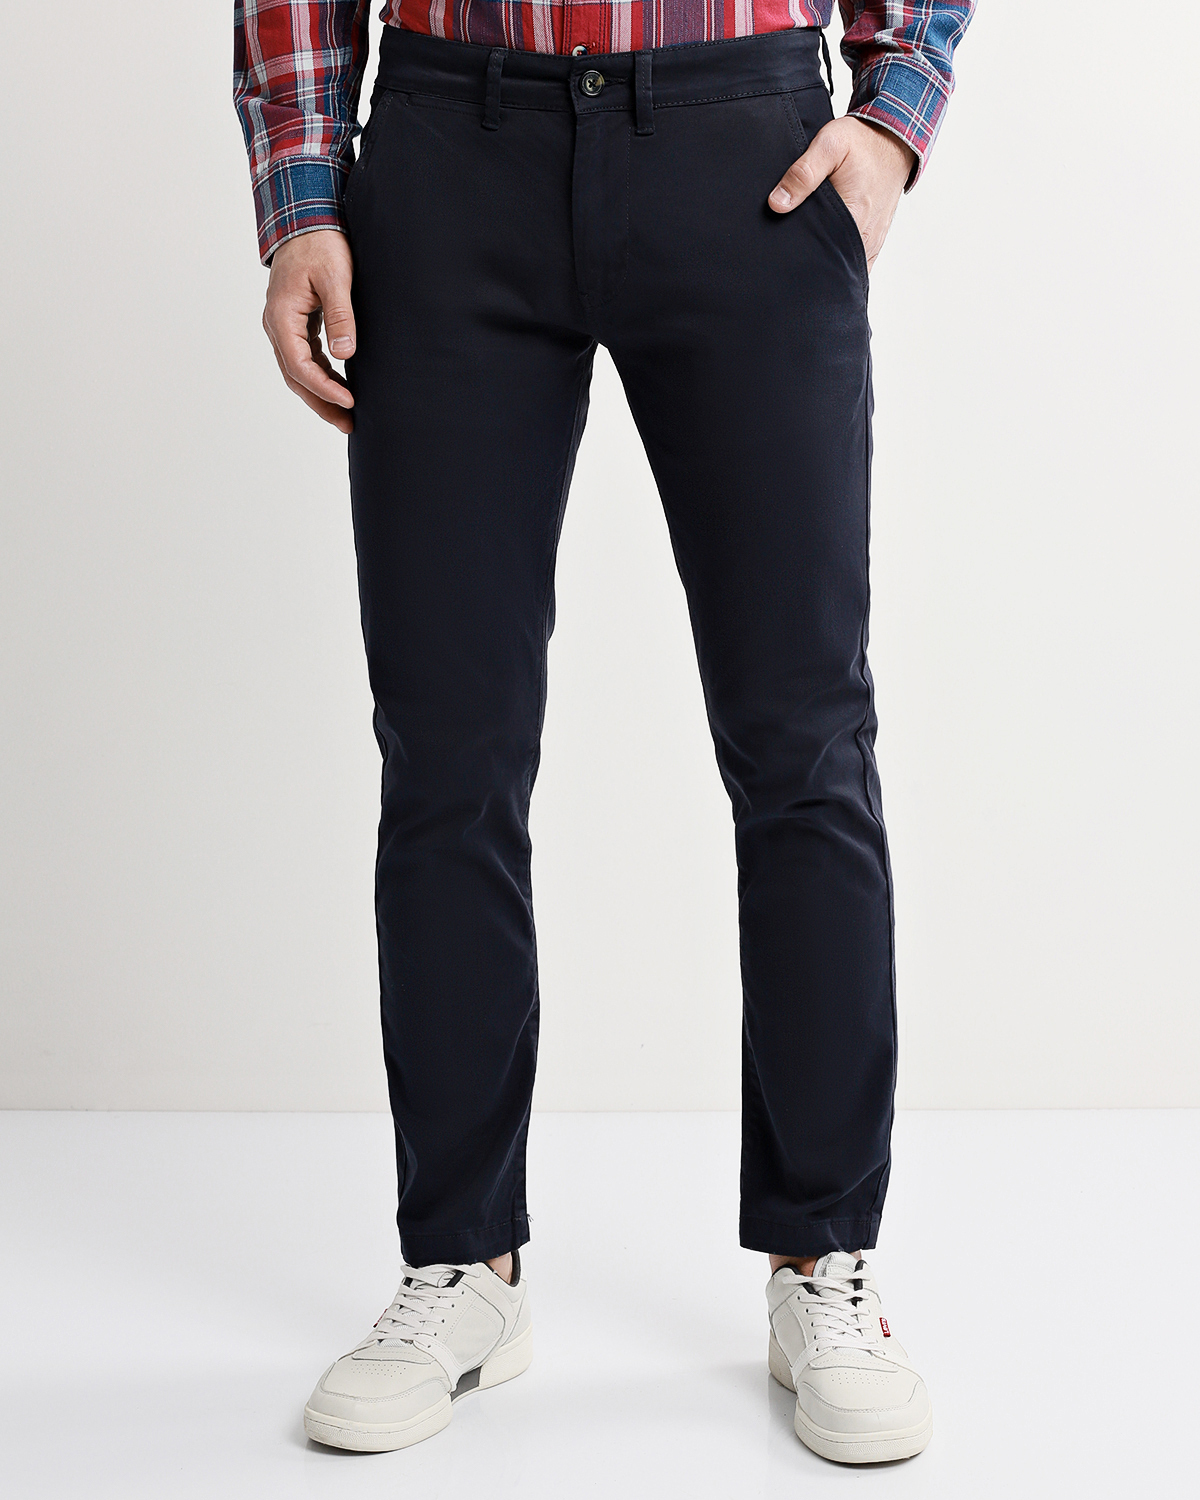 Pepe jeans мужские купить. Pepe Jeans брюки. Pepe Jeans что за бренд. Отзывы Tello джинсы.